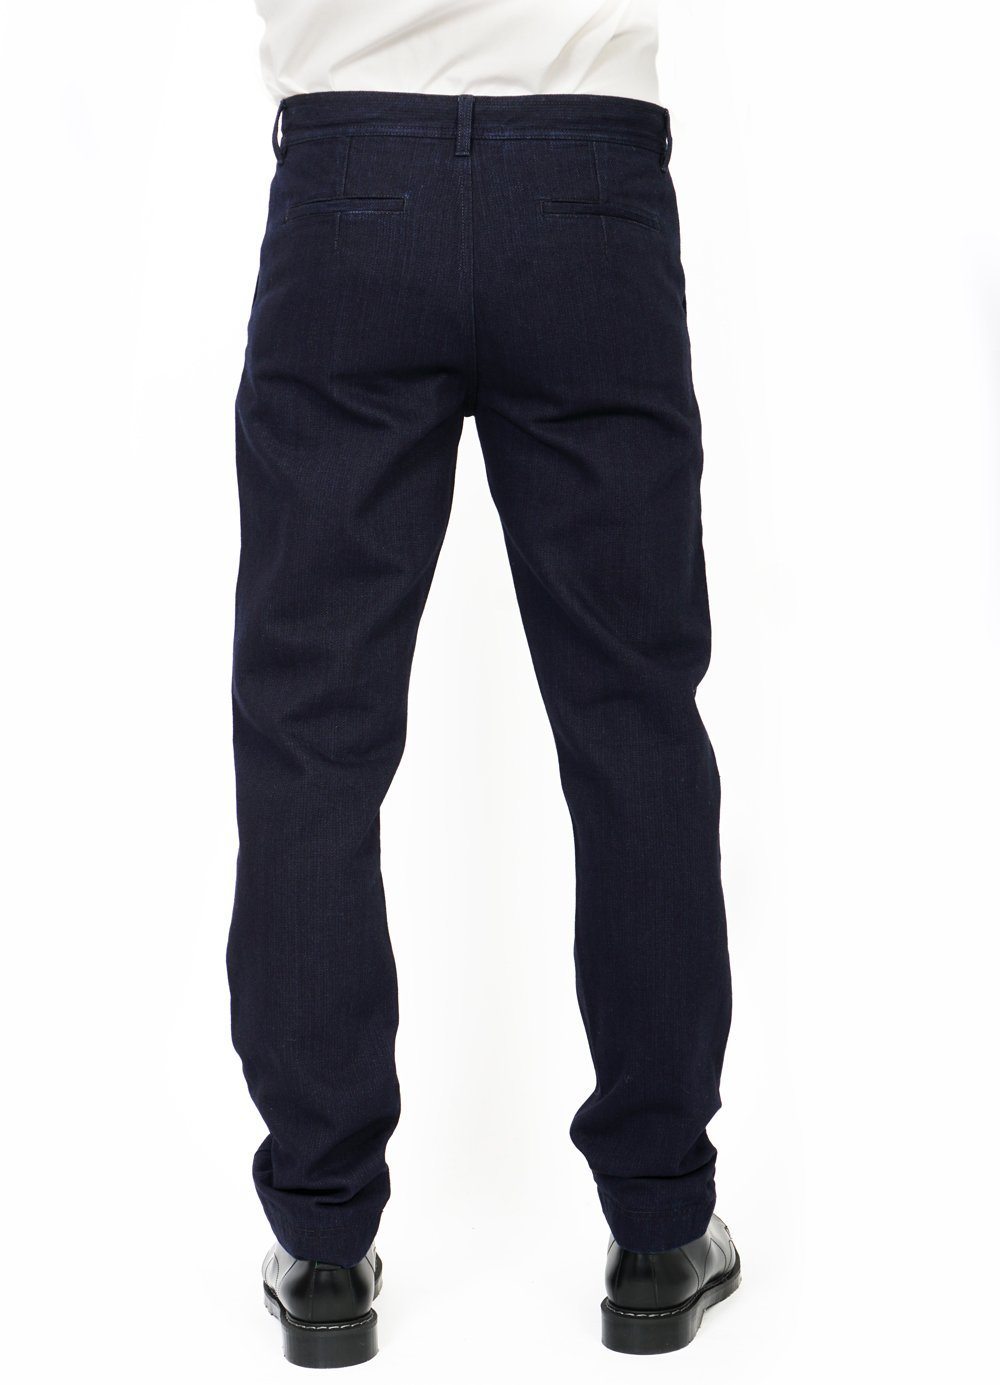 FRED | Regular Fit Trousers | Black Indigo | 200€ -HANSEN Garments- HANSEN Garments